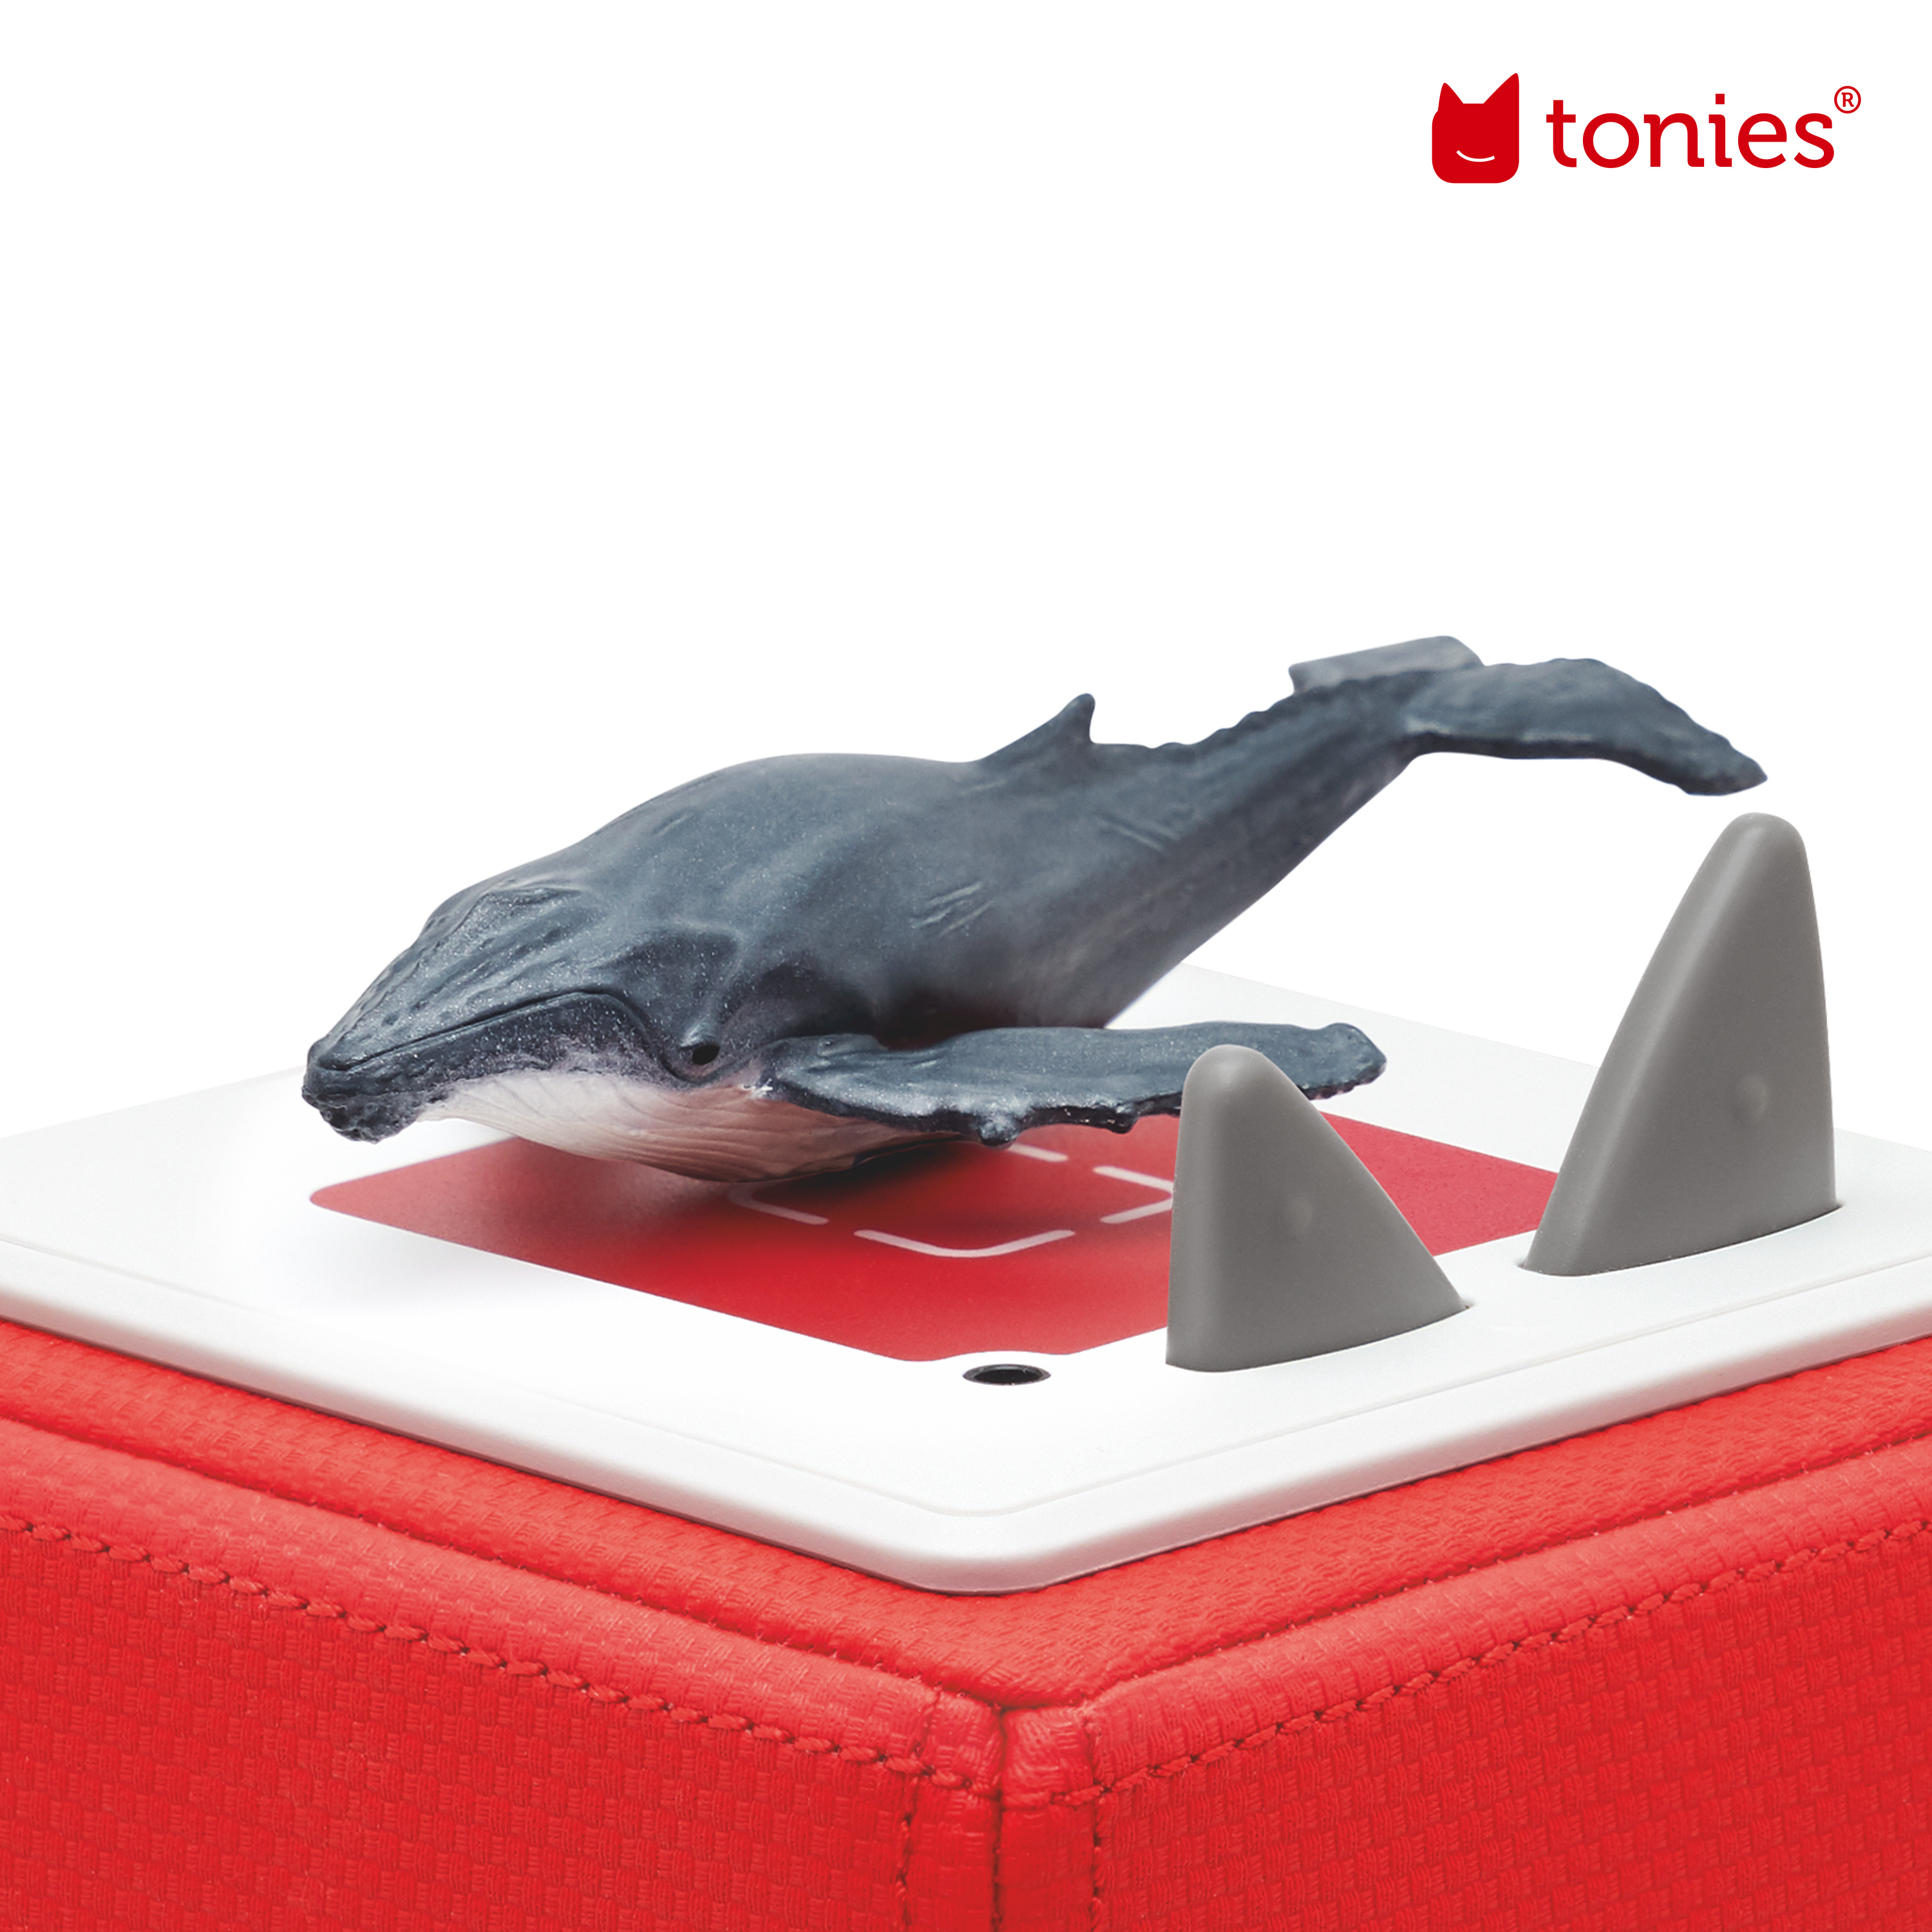 Tonie 'Was ist Was – Wale & Delfine / Geheimnis Tiefsee'